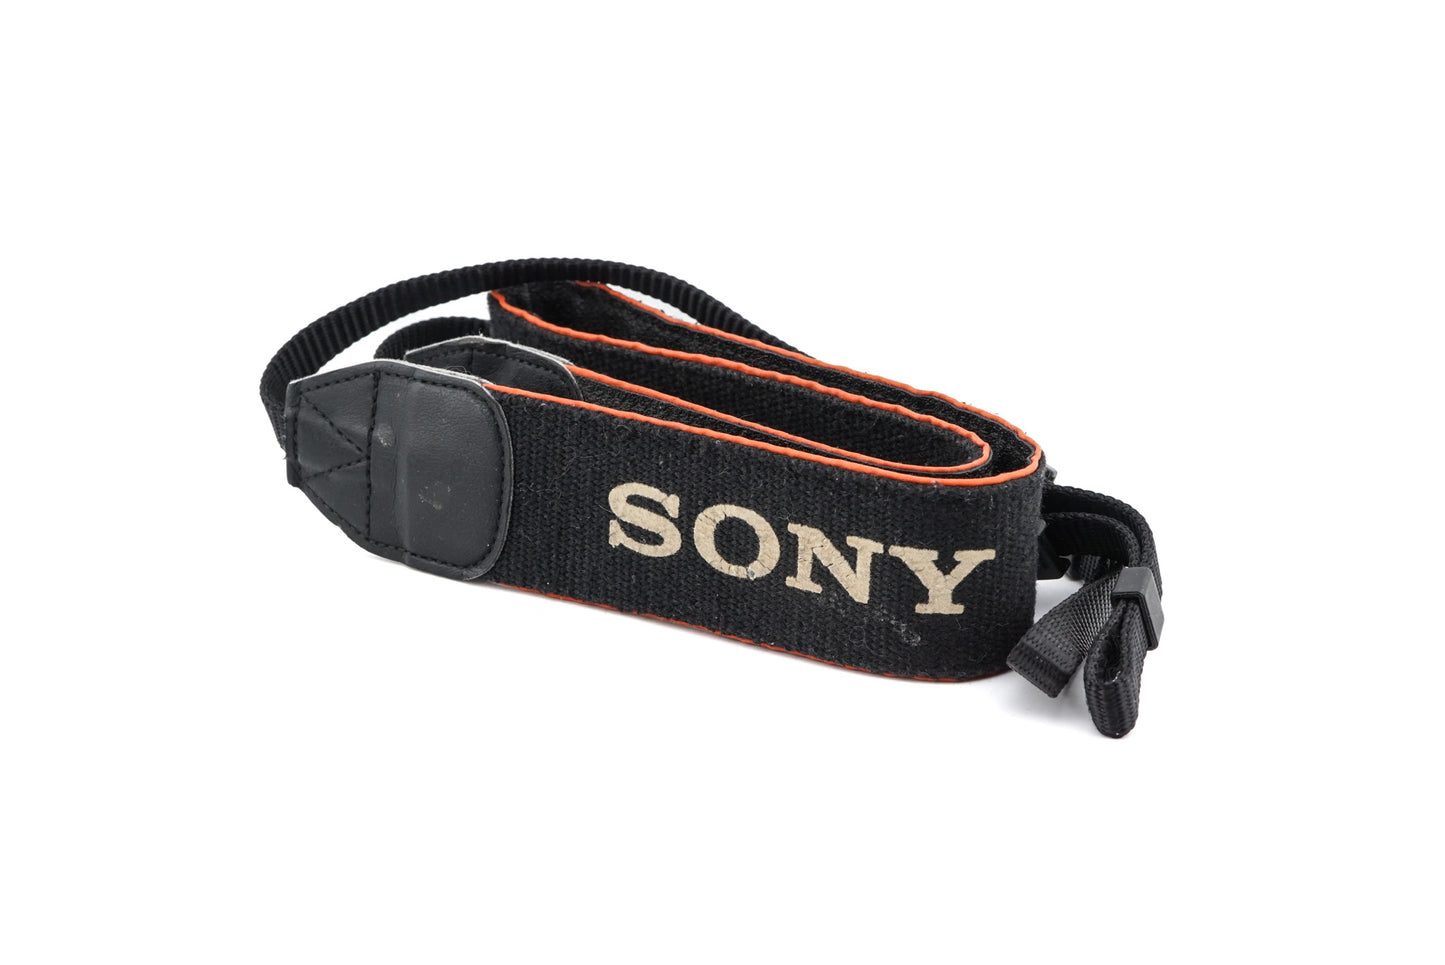 Sony SLR Strap - Accessory